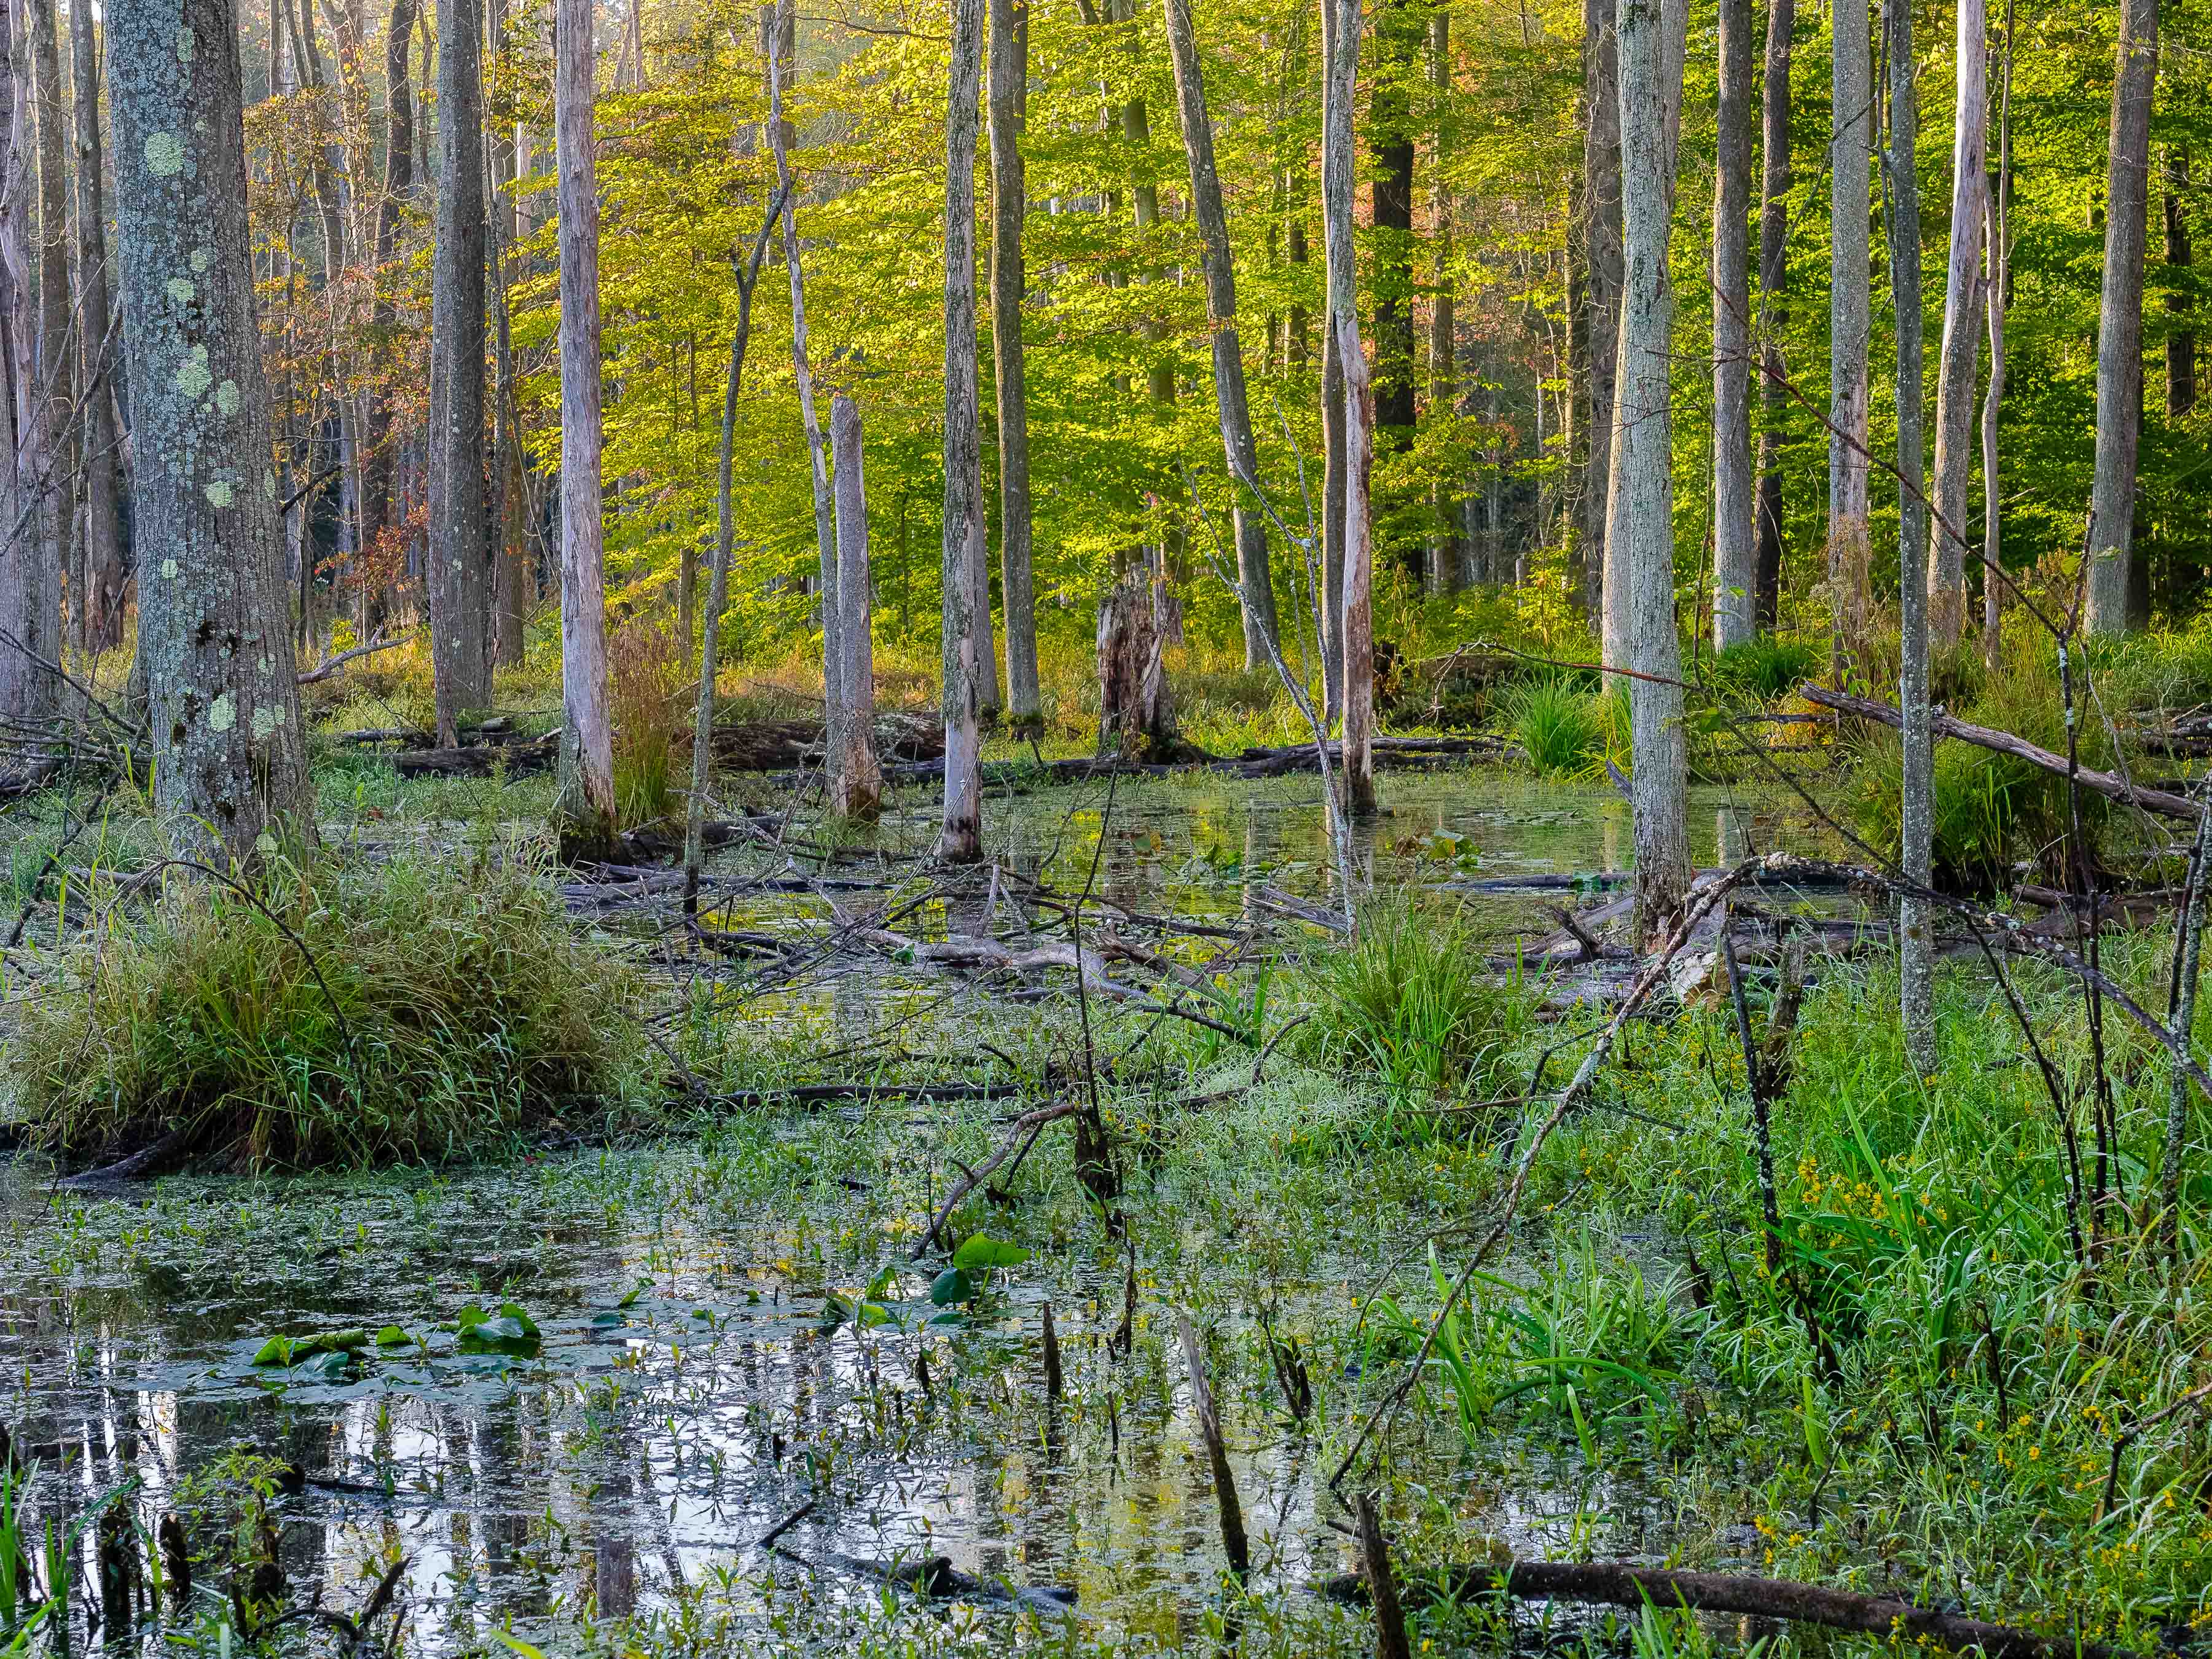 Wetland habitat at Morgan Swamp Preserve.